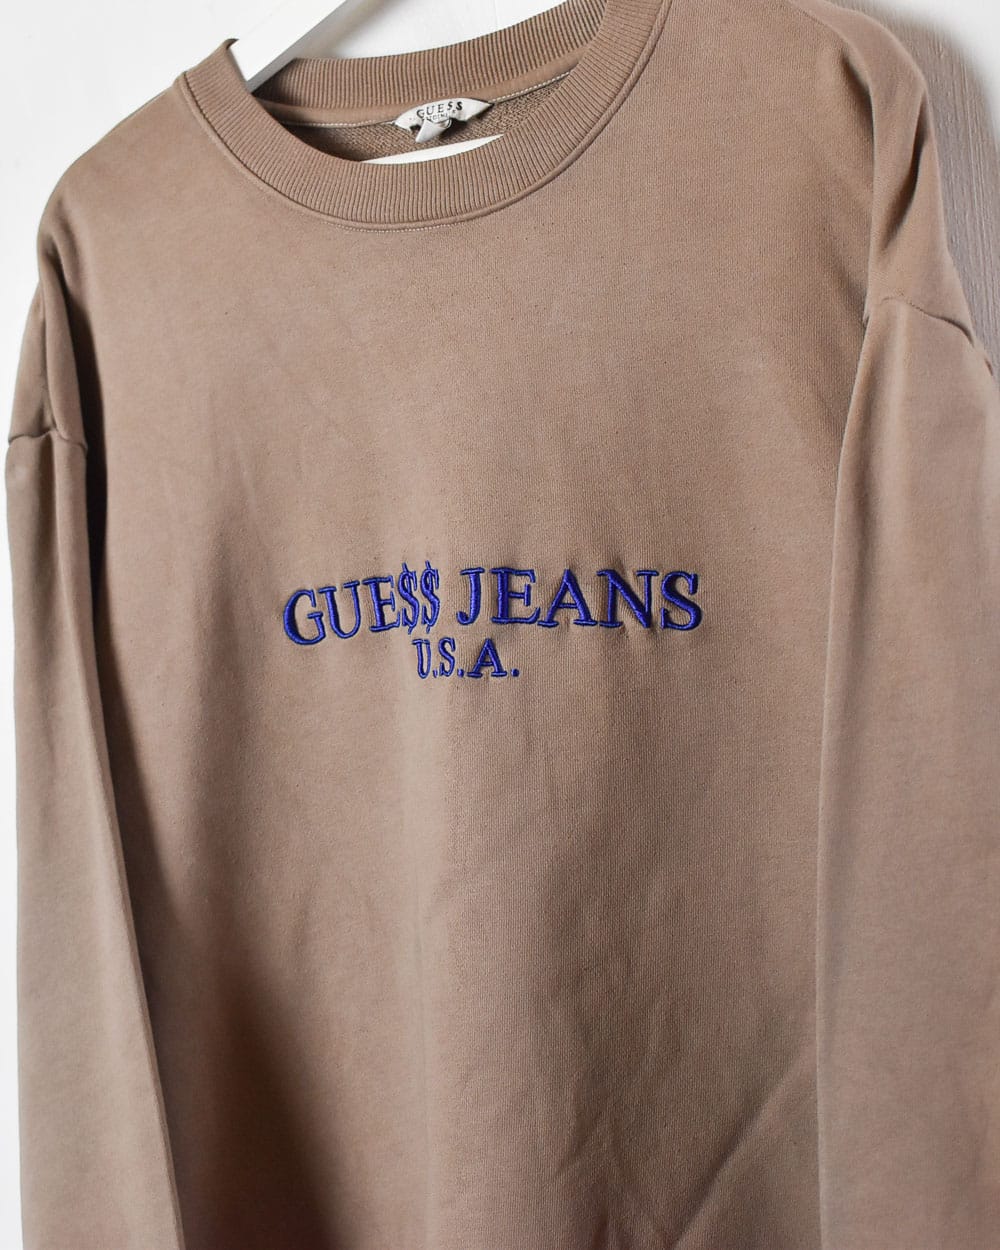 Brown Guess Jeans USA Sweatshirt - Medium